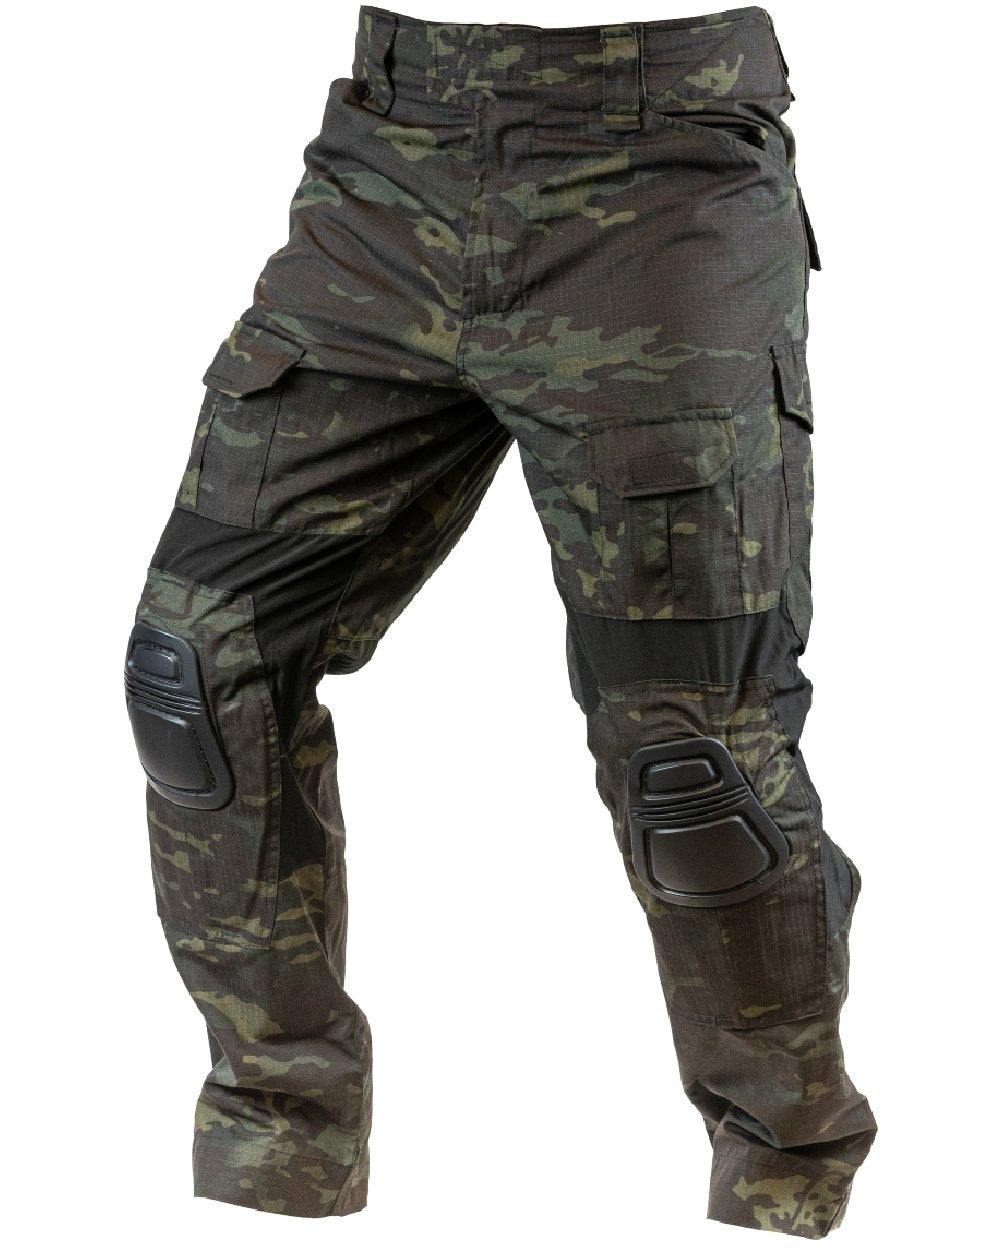 Viper Elite Trousers Gen2 in VCAM Black 